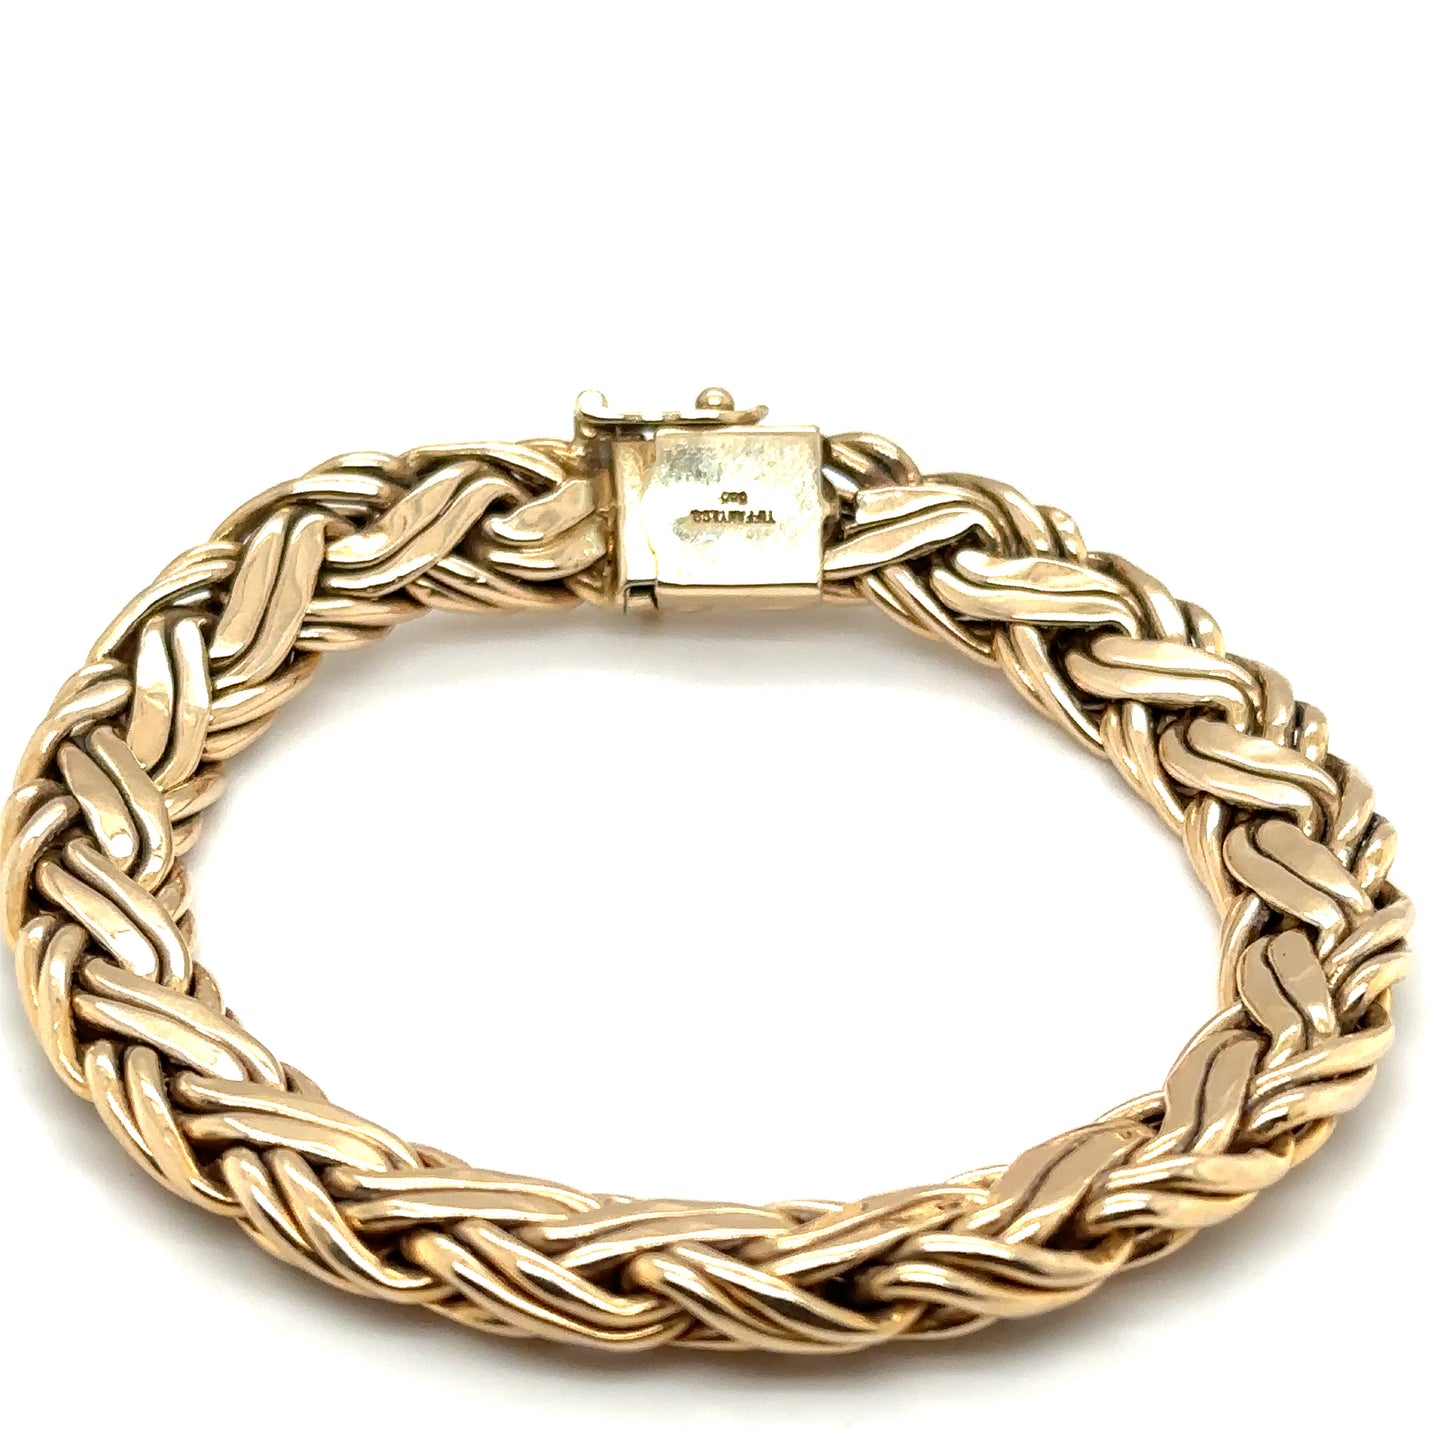 Tiffany & Co. Byzantine Chain Bracelet in 14K Gold